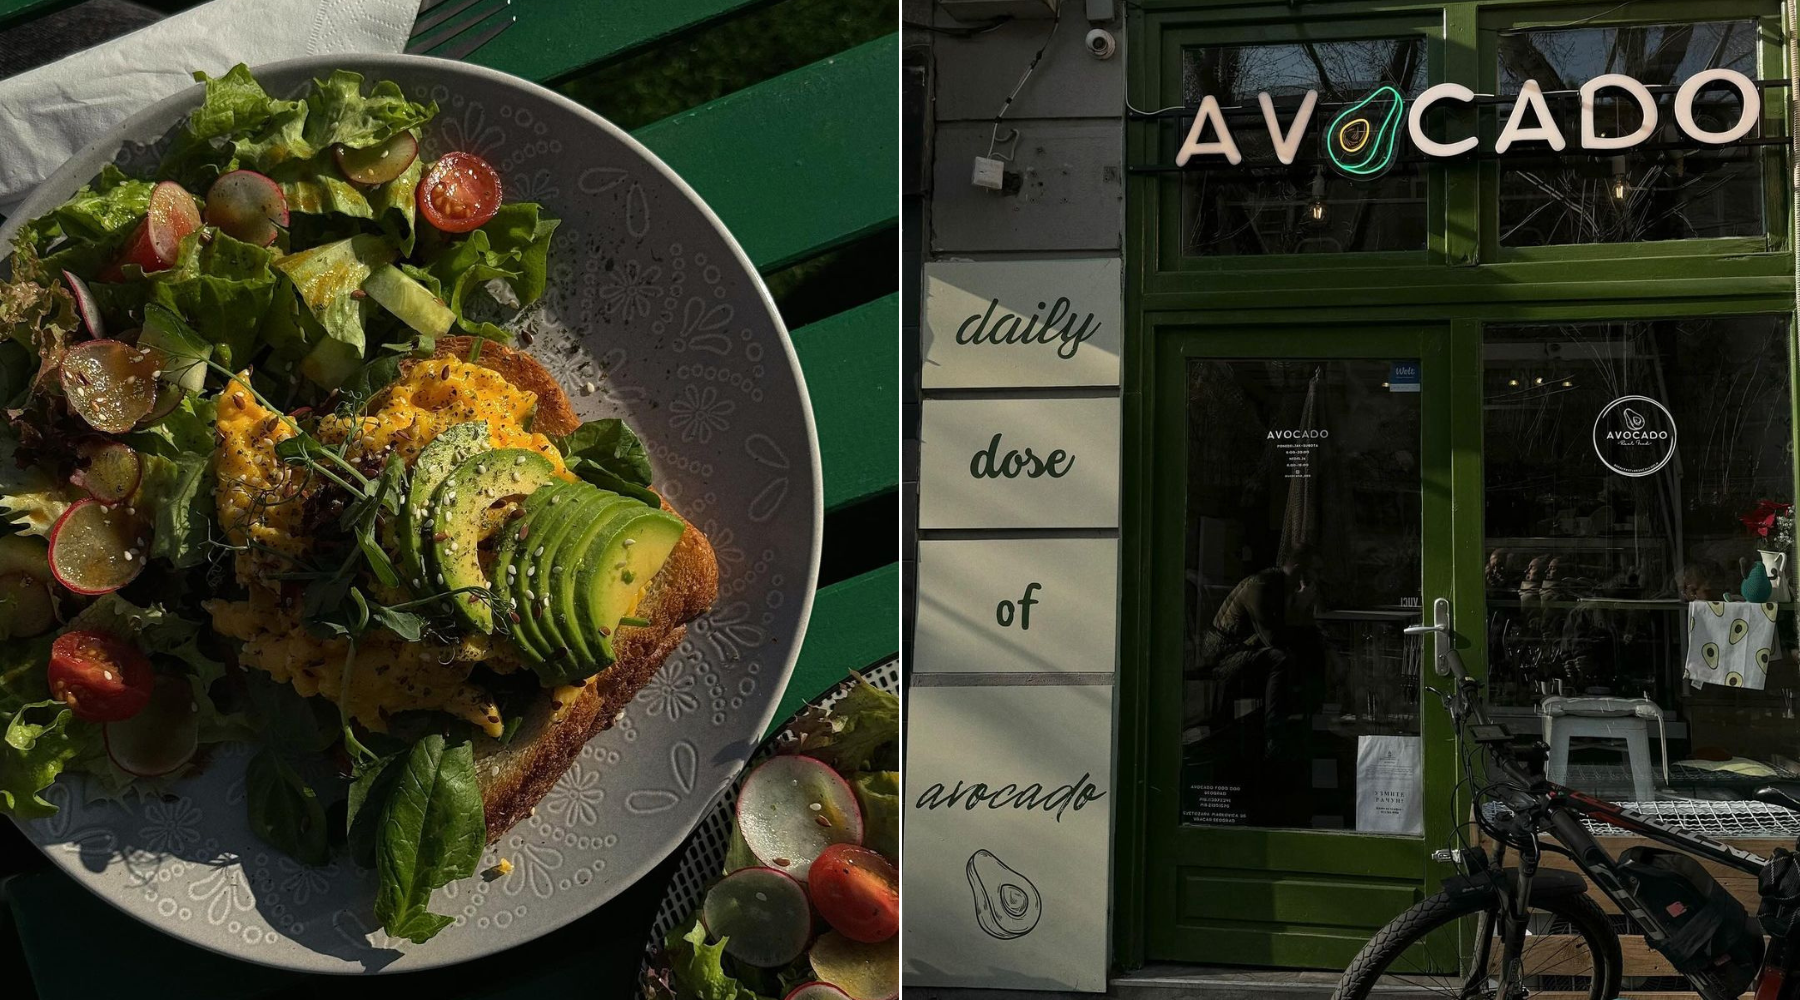 Avocado: Nova lokacija za brunch u gradu gde avokado zauzima centralno mesto